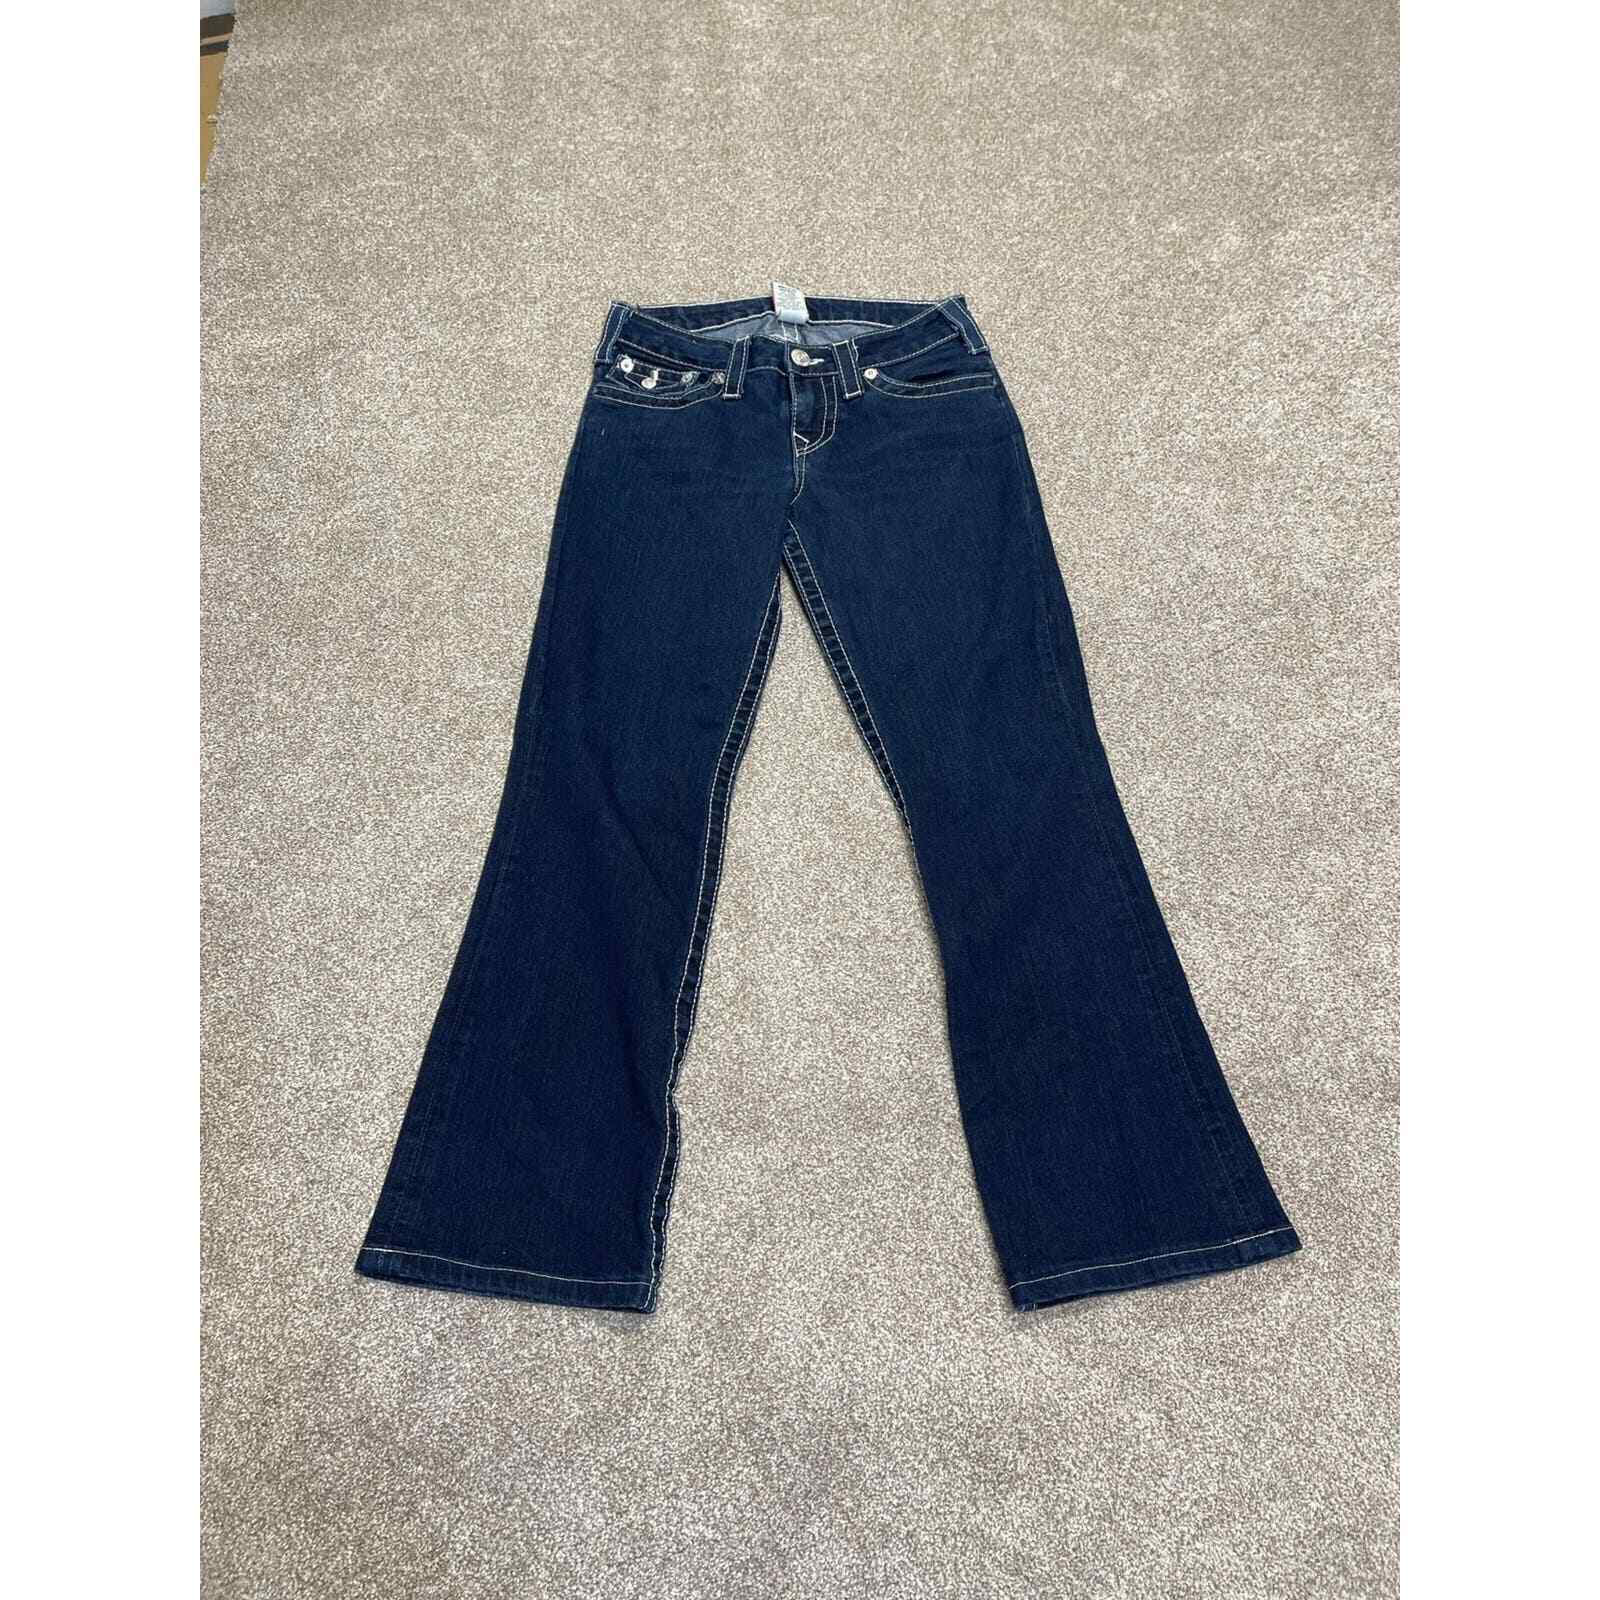 True religion bootcut jeans womens sz 29 blue jea… - image 4